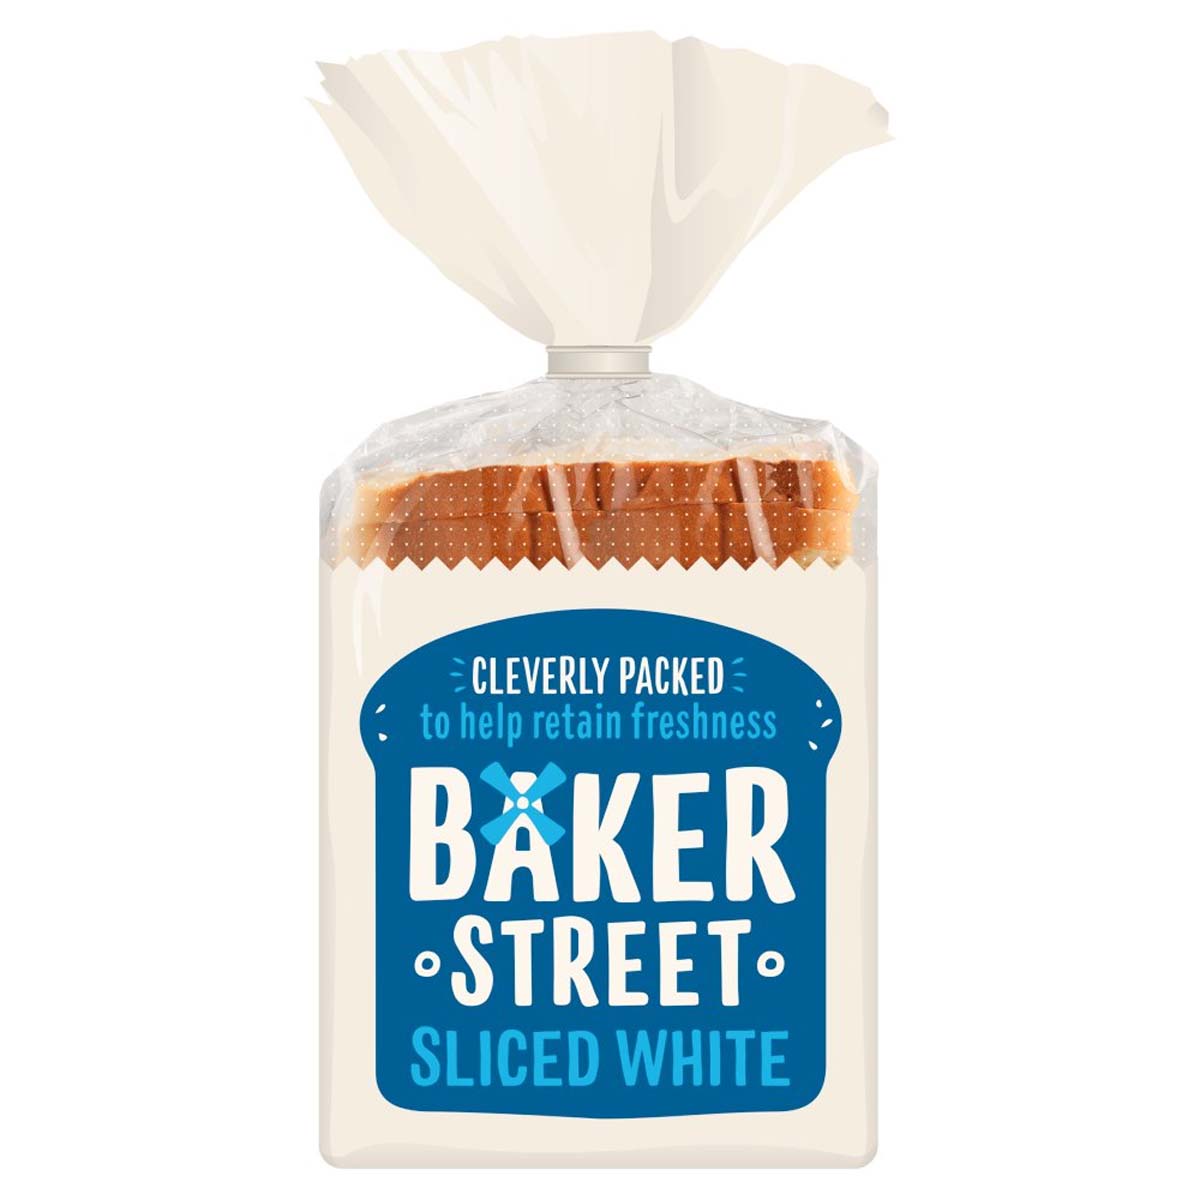 Baker Street - Sliced White - 550g - Continental Food Store